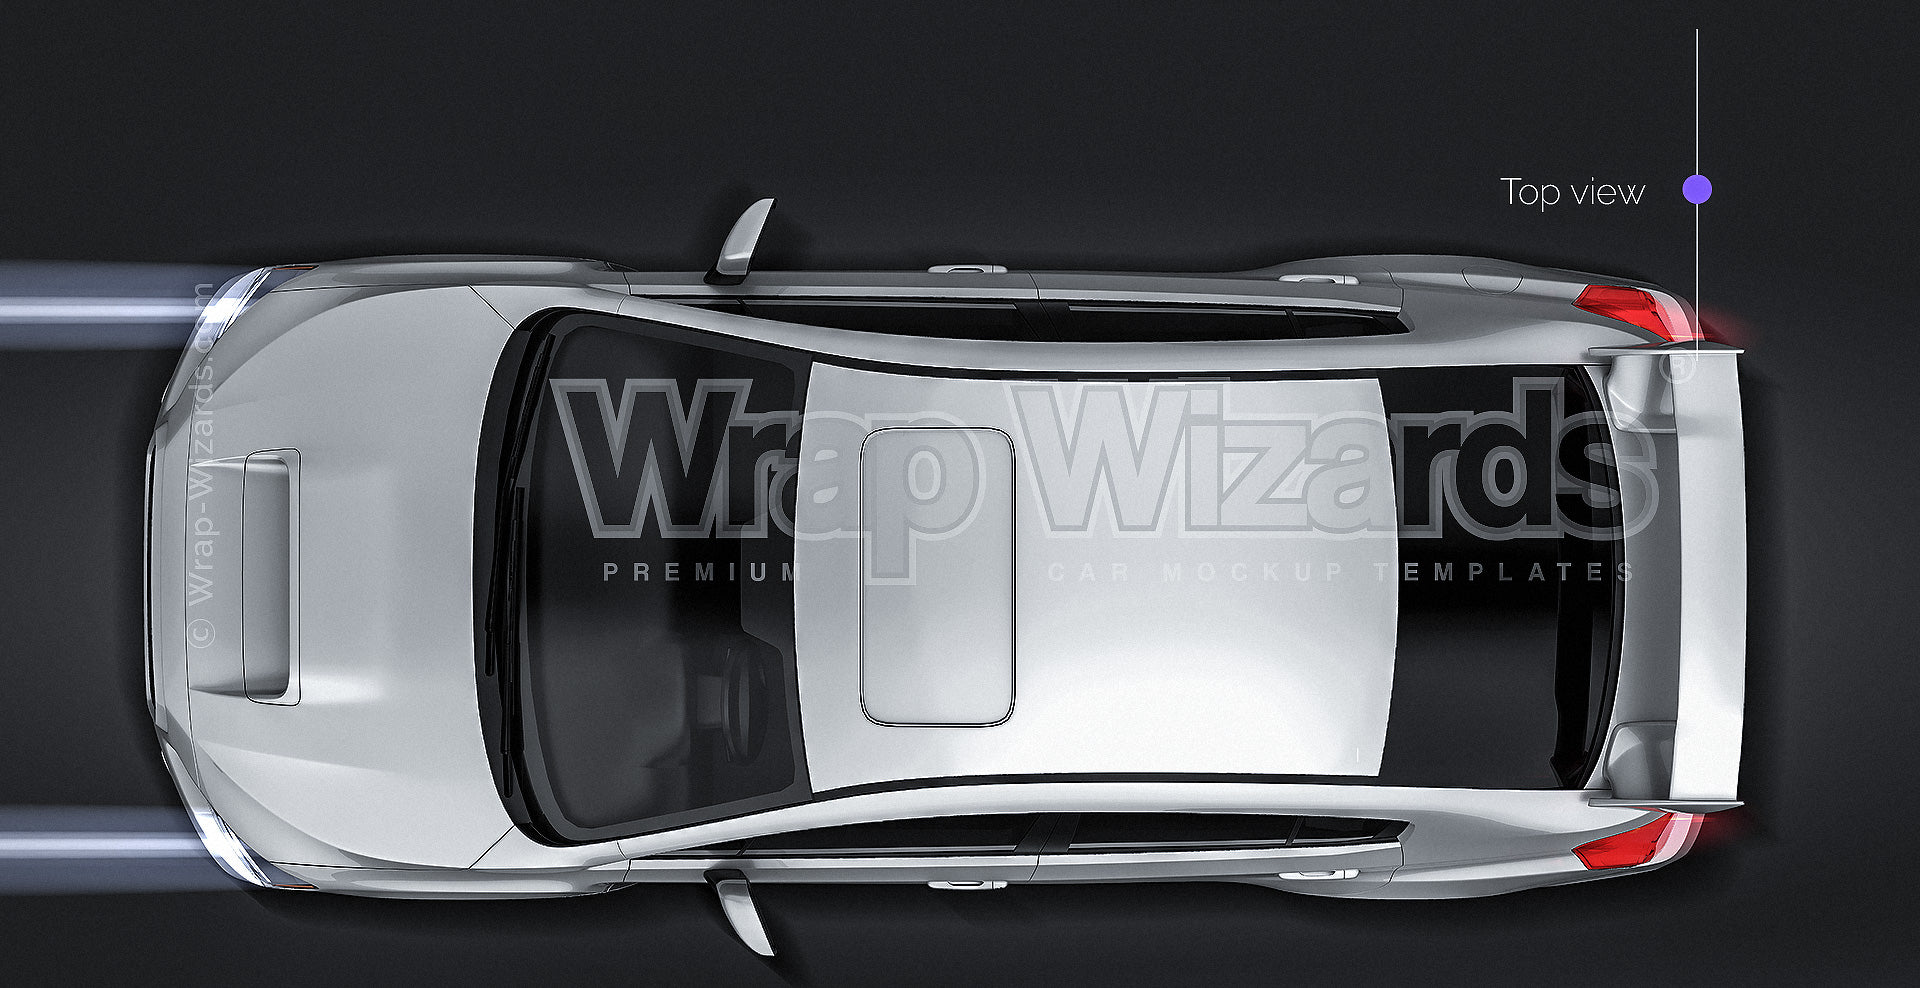 Subaru Impreza WRX STI 2015 glossy finish - all sides Car Mockup Template.psd